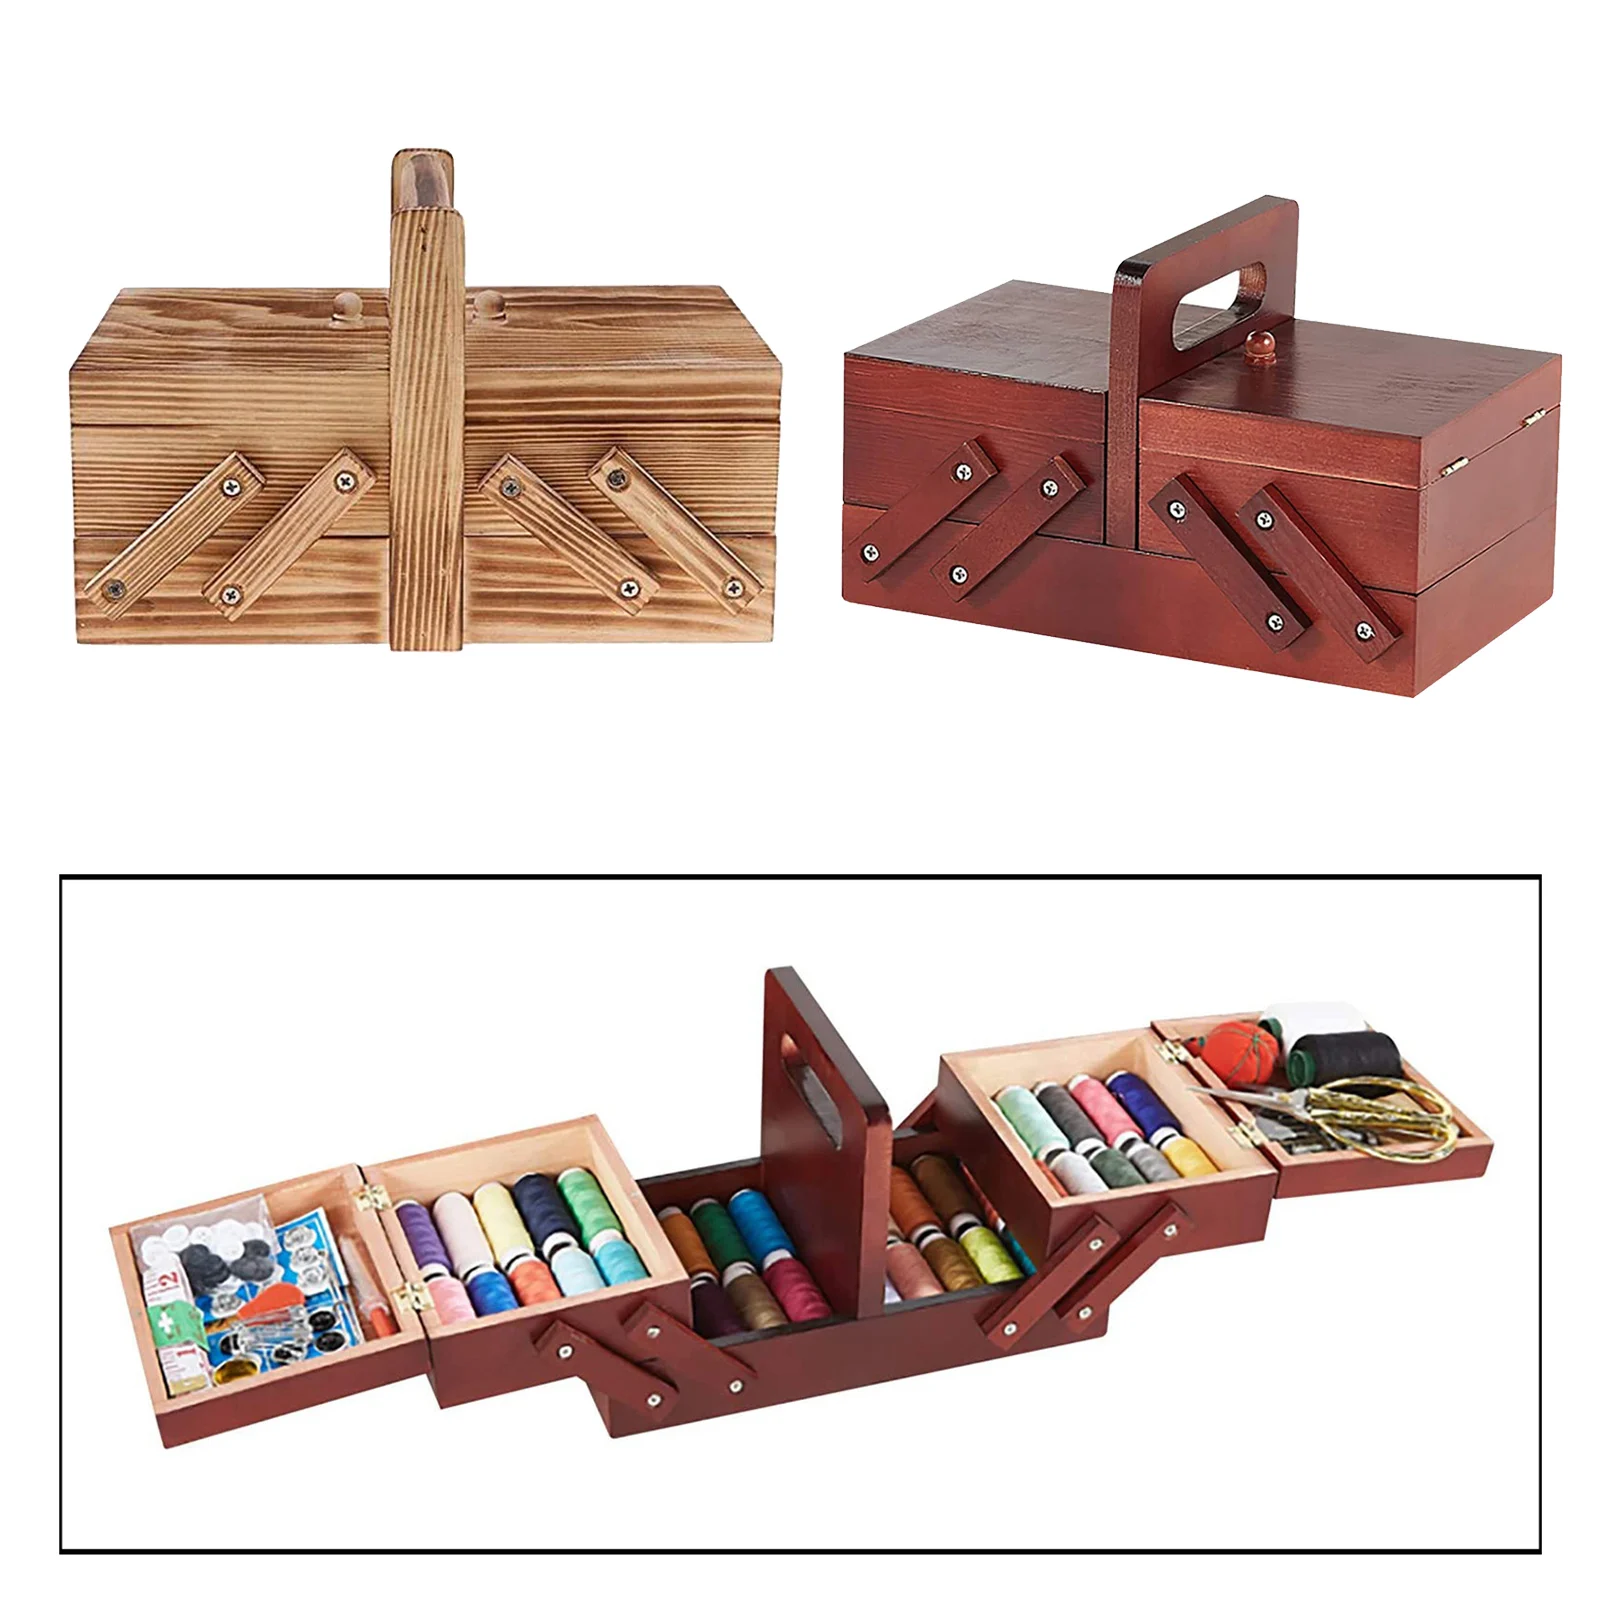 Wooden Sewing Box Jewelry Storage Box Cosmetics Case Organizer For Home Jewelry/Sewing Kits Storage Box